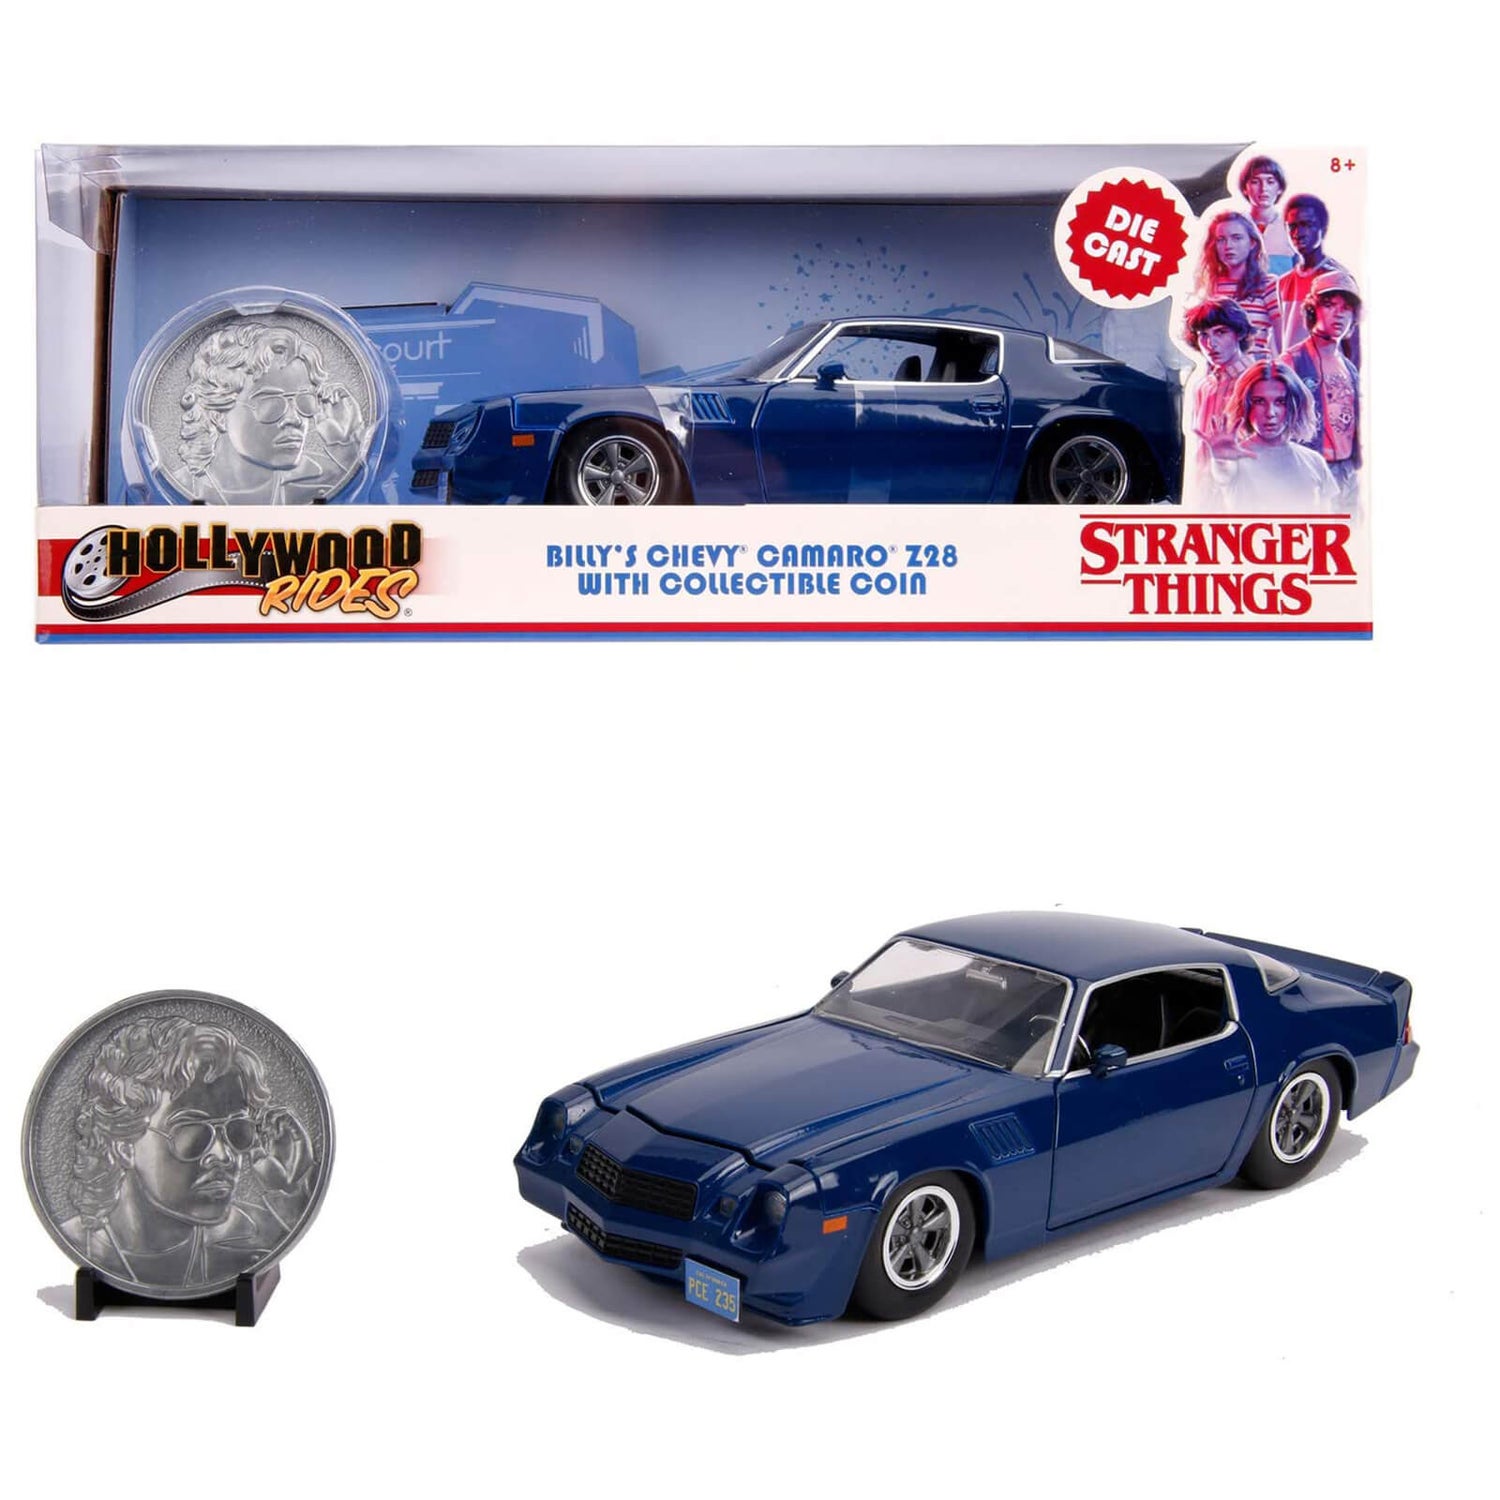 Jada Toys Stranger Things 1979 Chevy Camaro Z28 im Maßstab 1:24